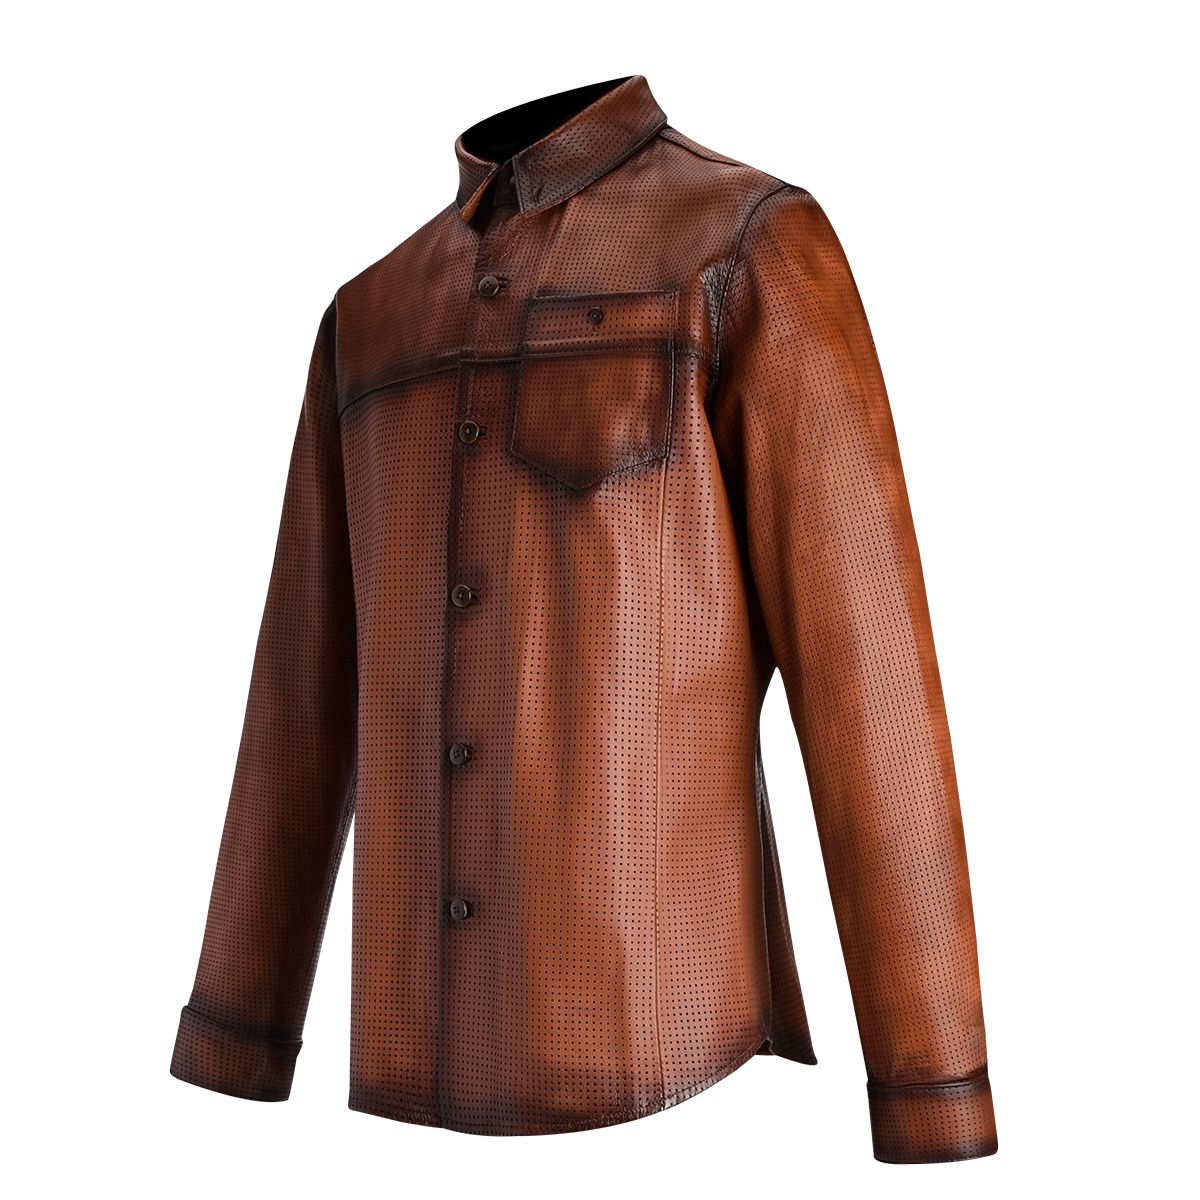 H280COC - Cuadra vegetal brown western fashion leather shirt jacket for men-Kuet.us